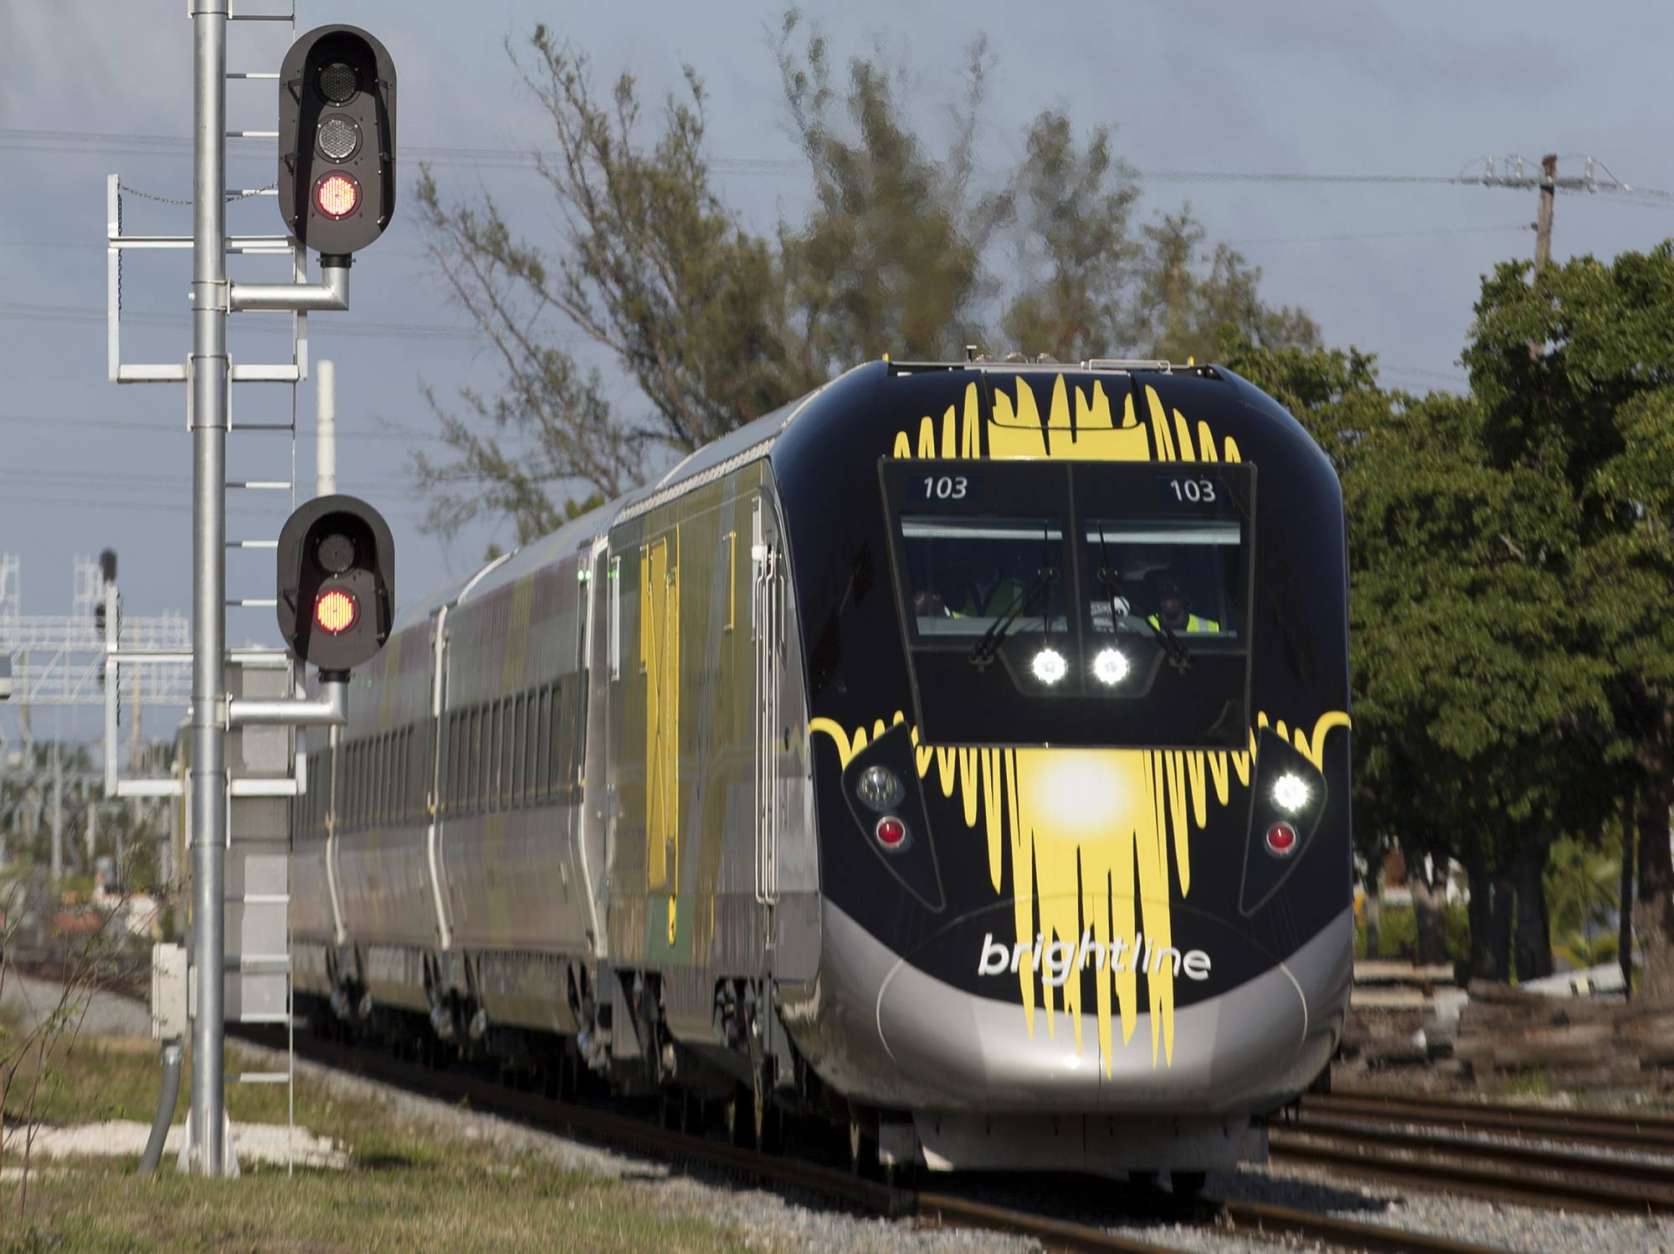 WTOP | Man hit by Florida's new high|speed train 4th death so far